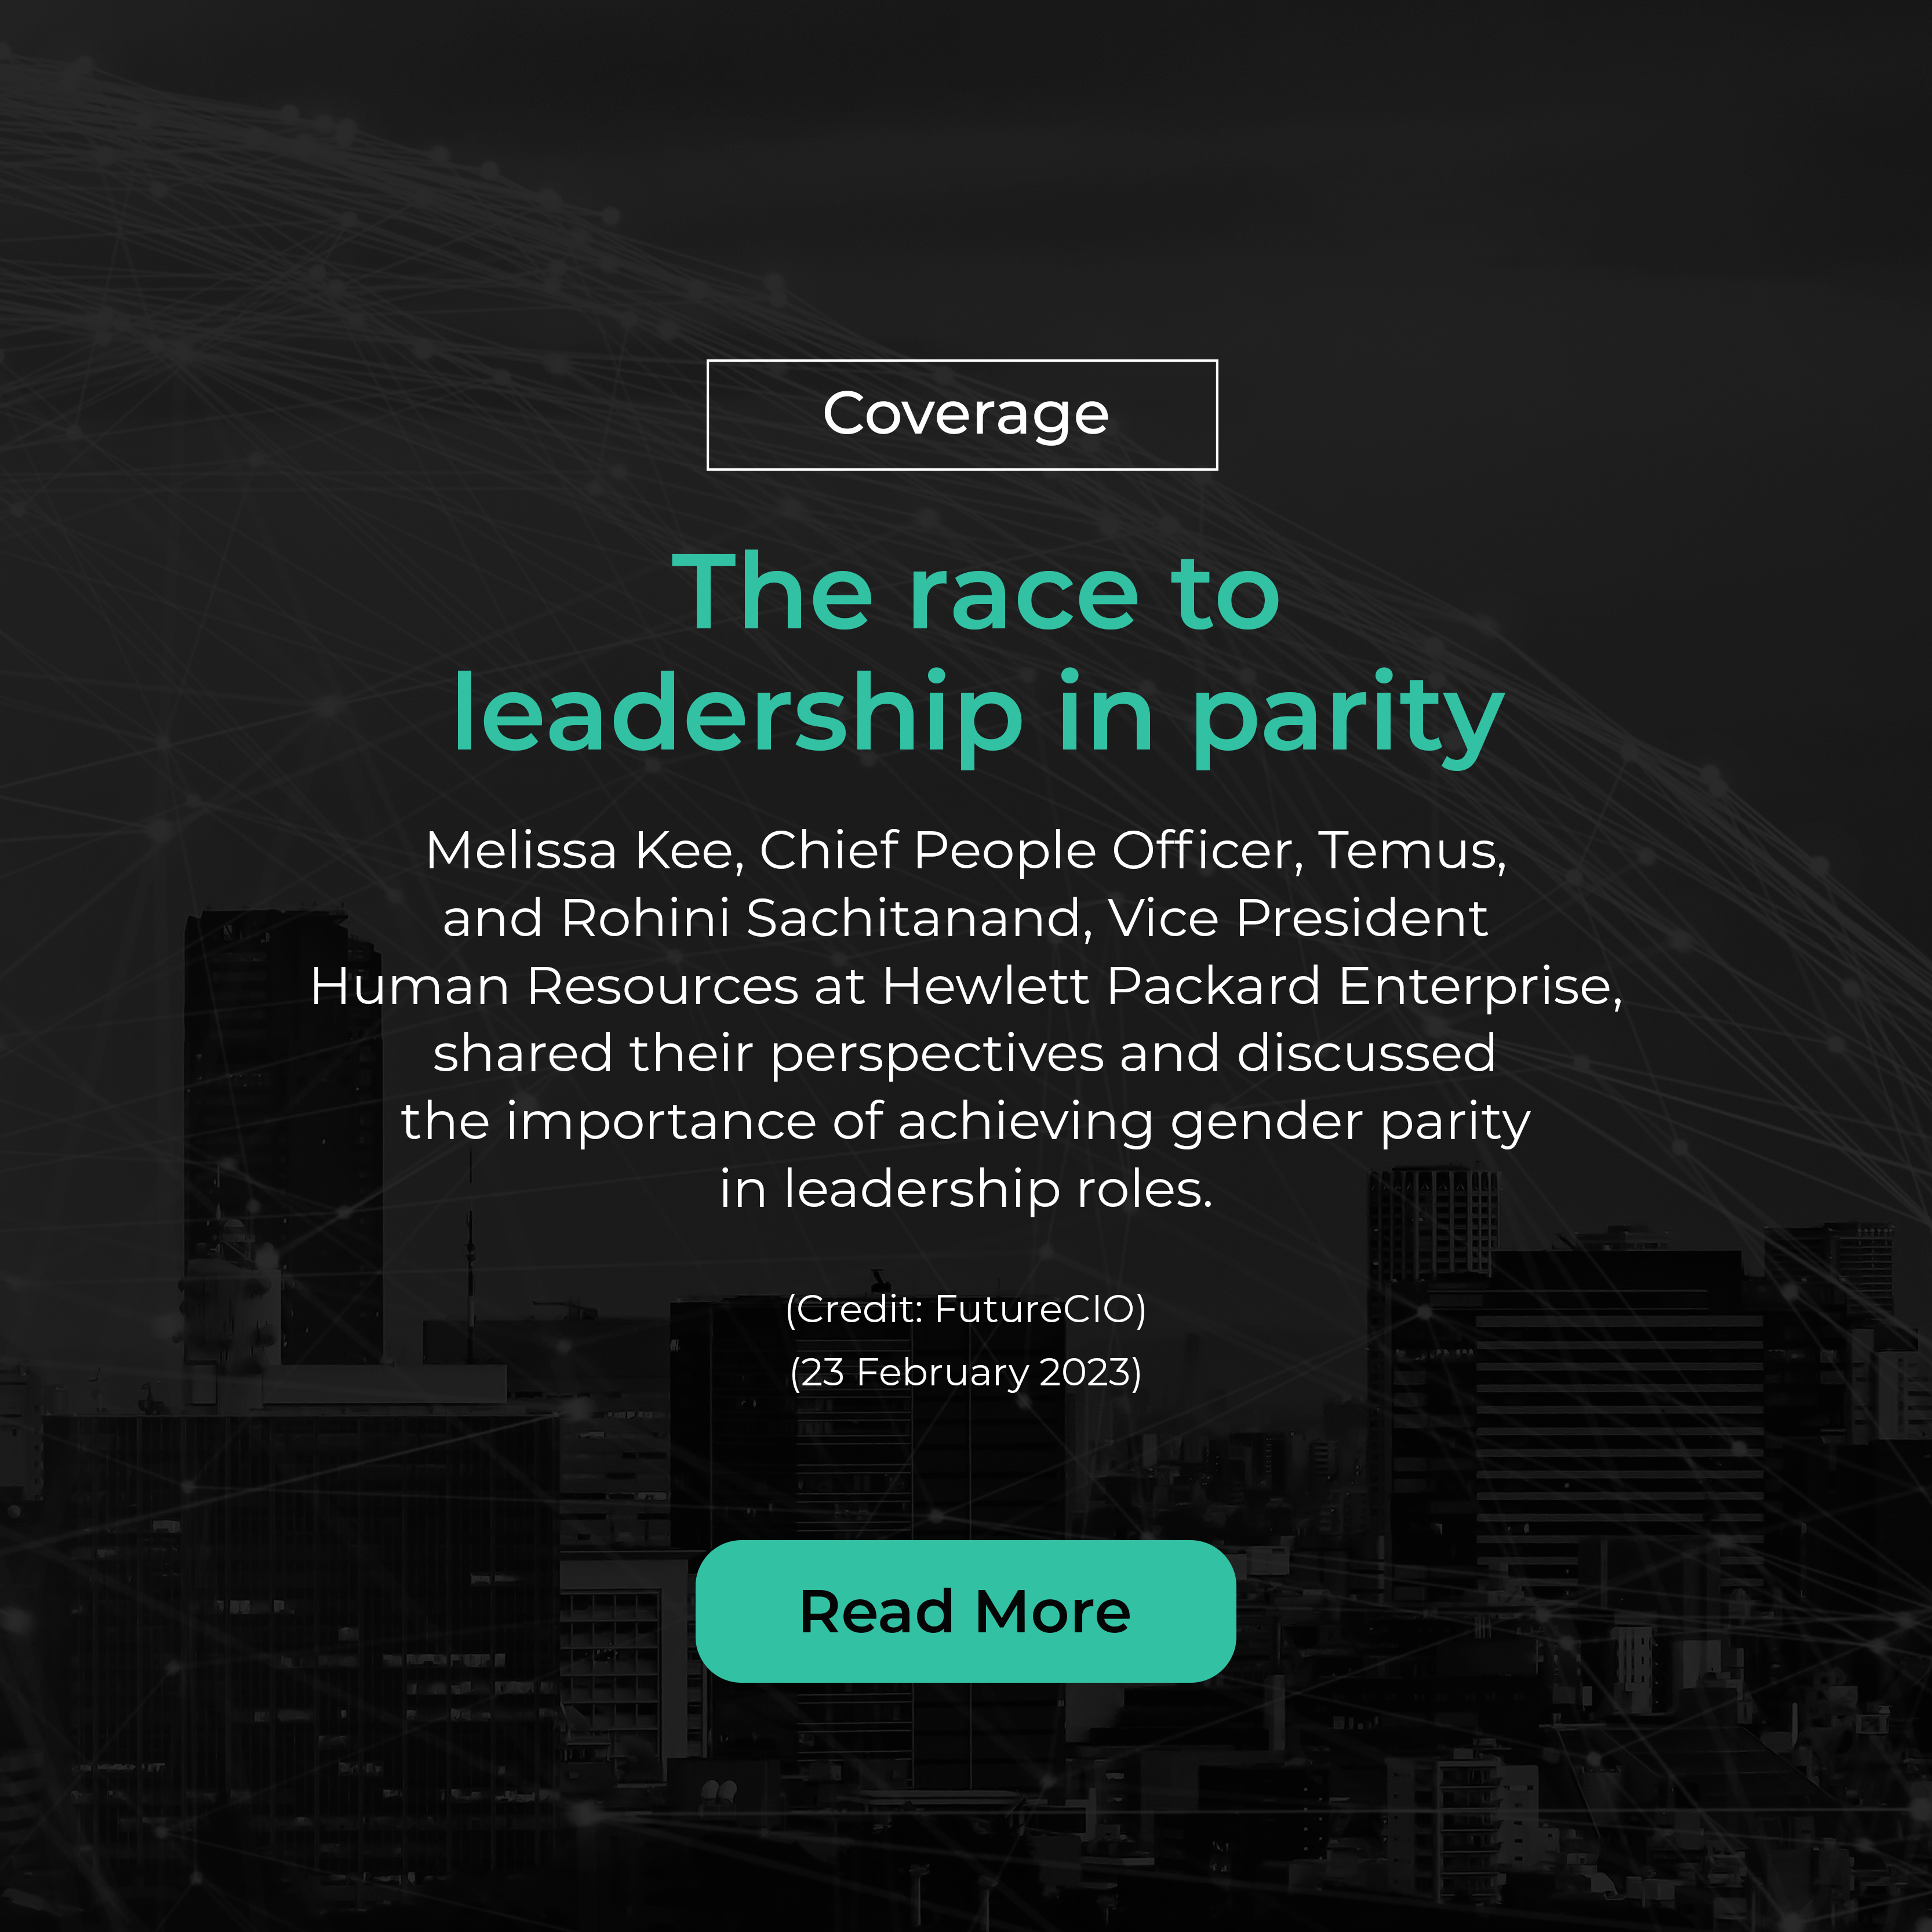 Coverage: The race to leadership in parity (FutureCIO)